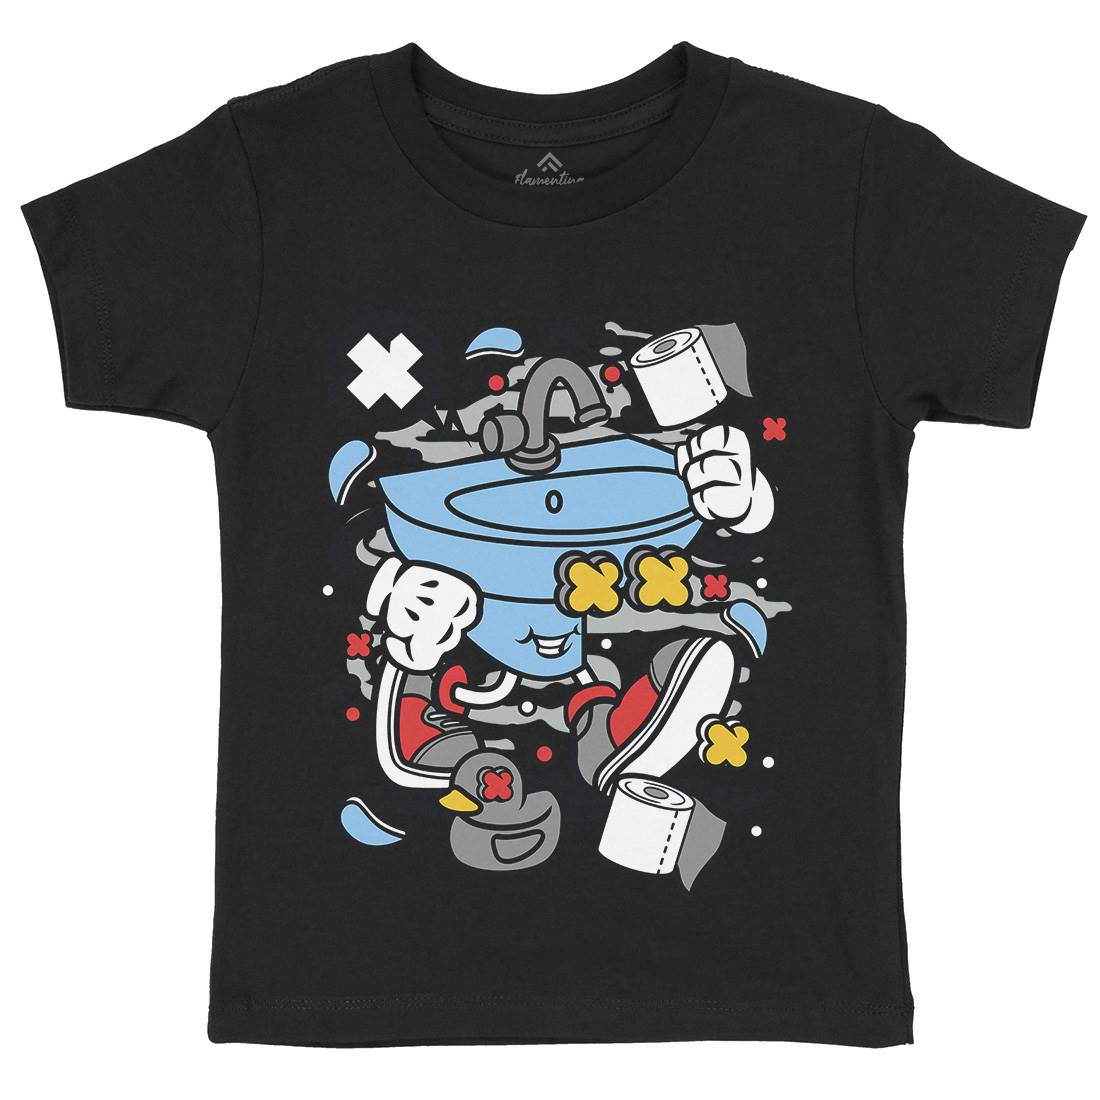 Sink Kids Organic Crew Neck T-Shirt Retro C652